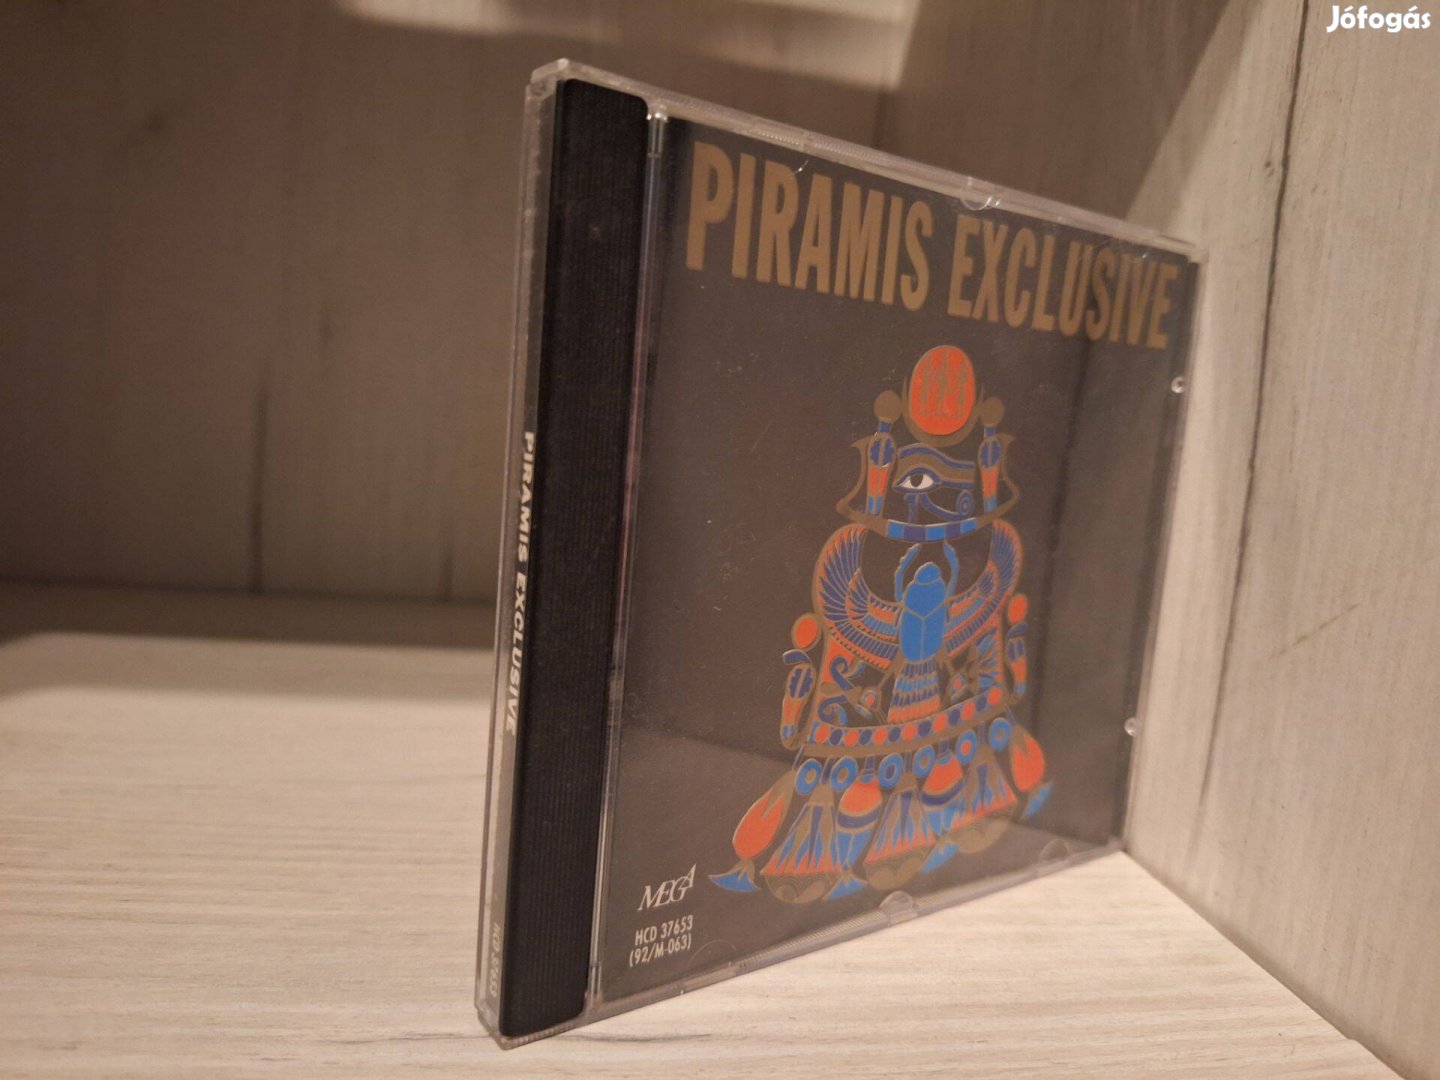 Piramis - Exclusive CD